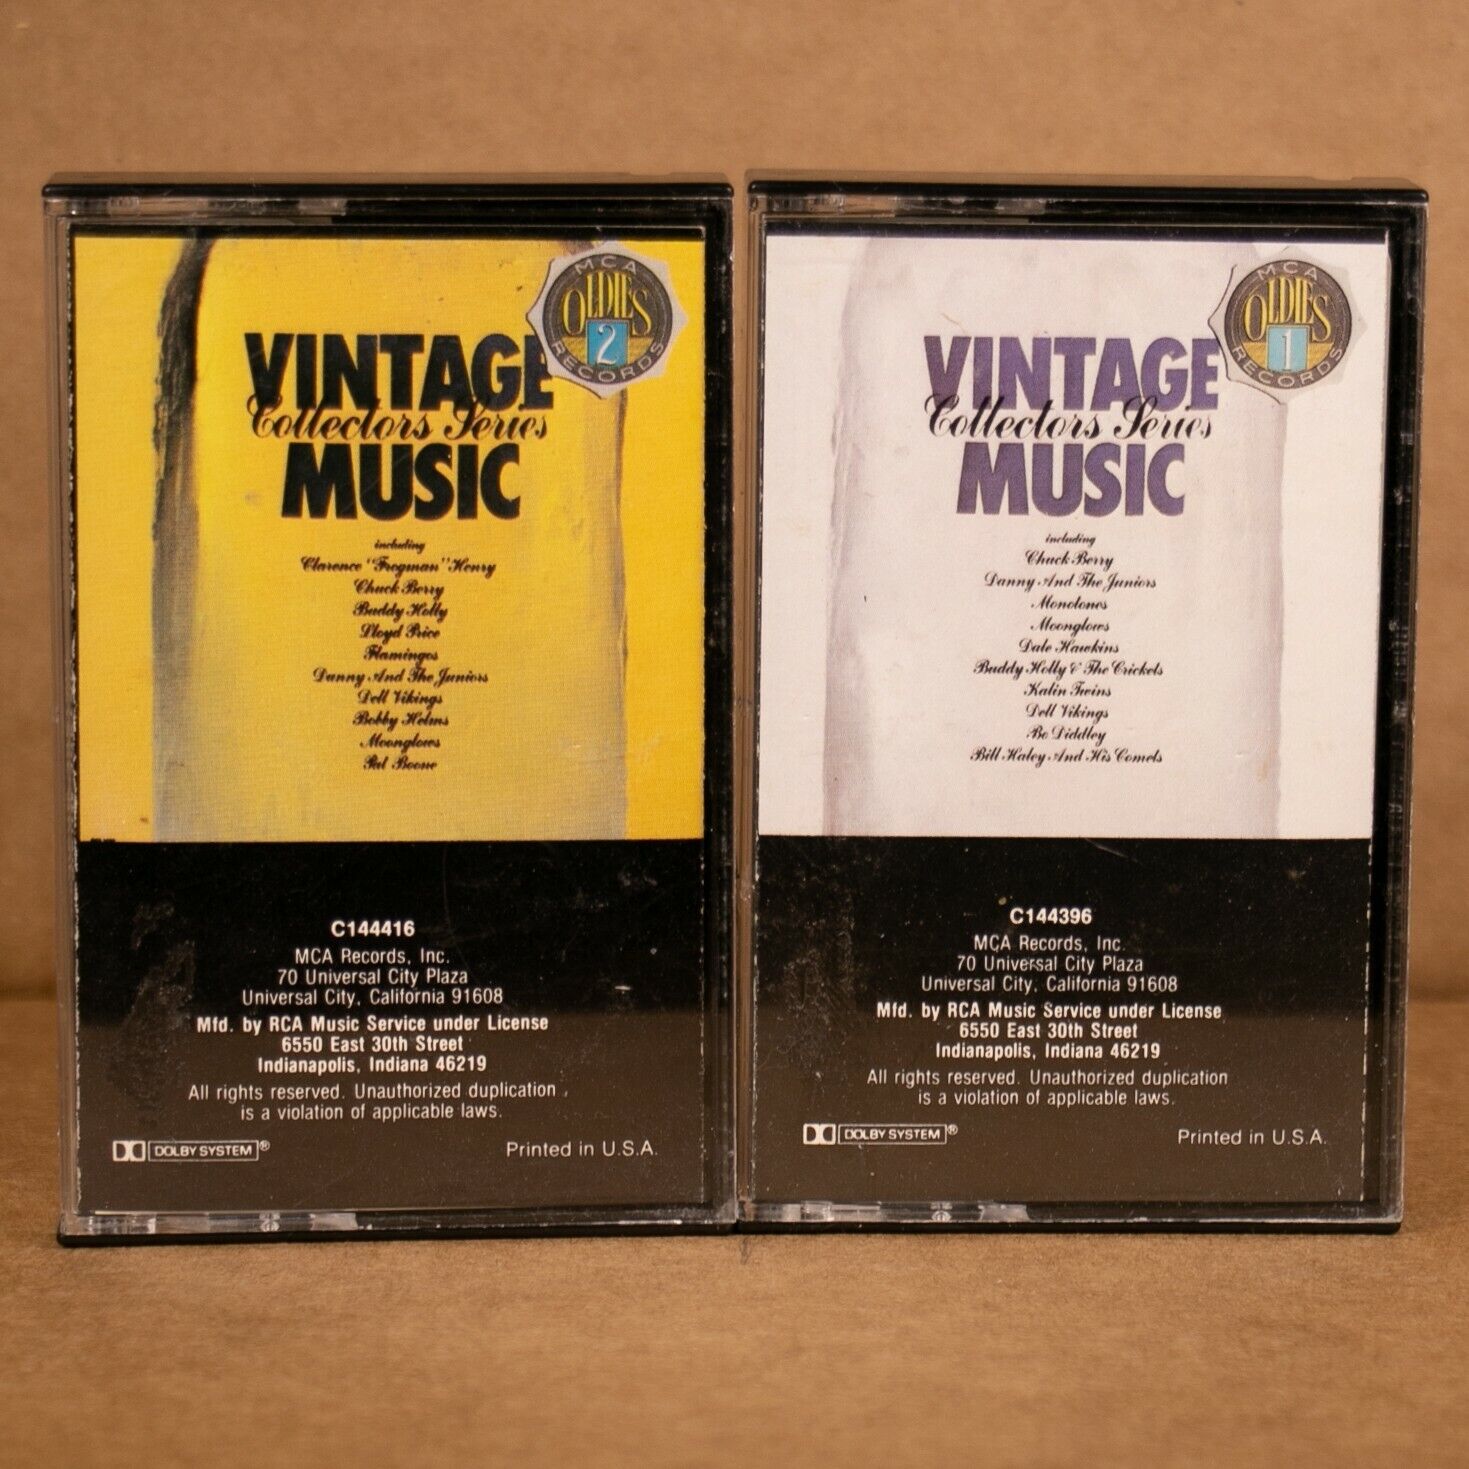 Vintage Music Collectors Series Audio Cassette Tape Classic 50s 60s Music